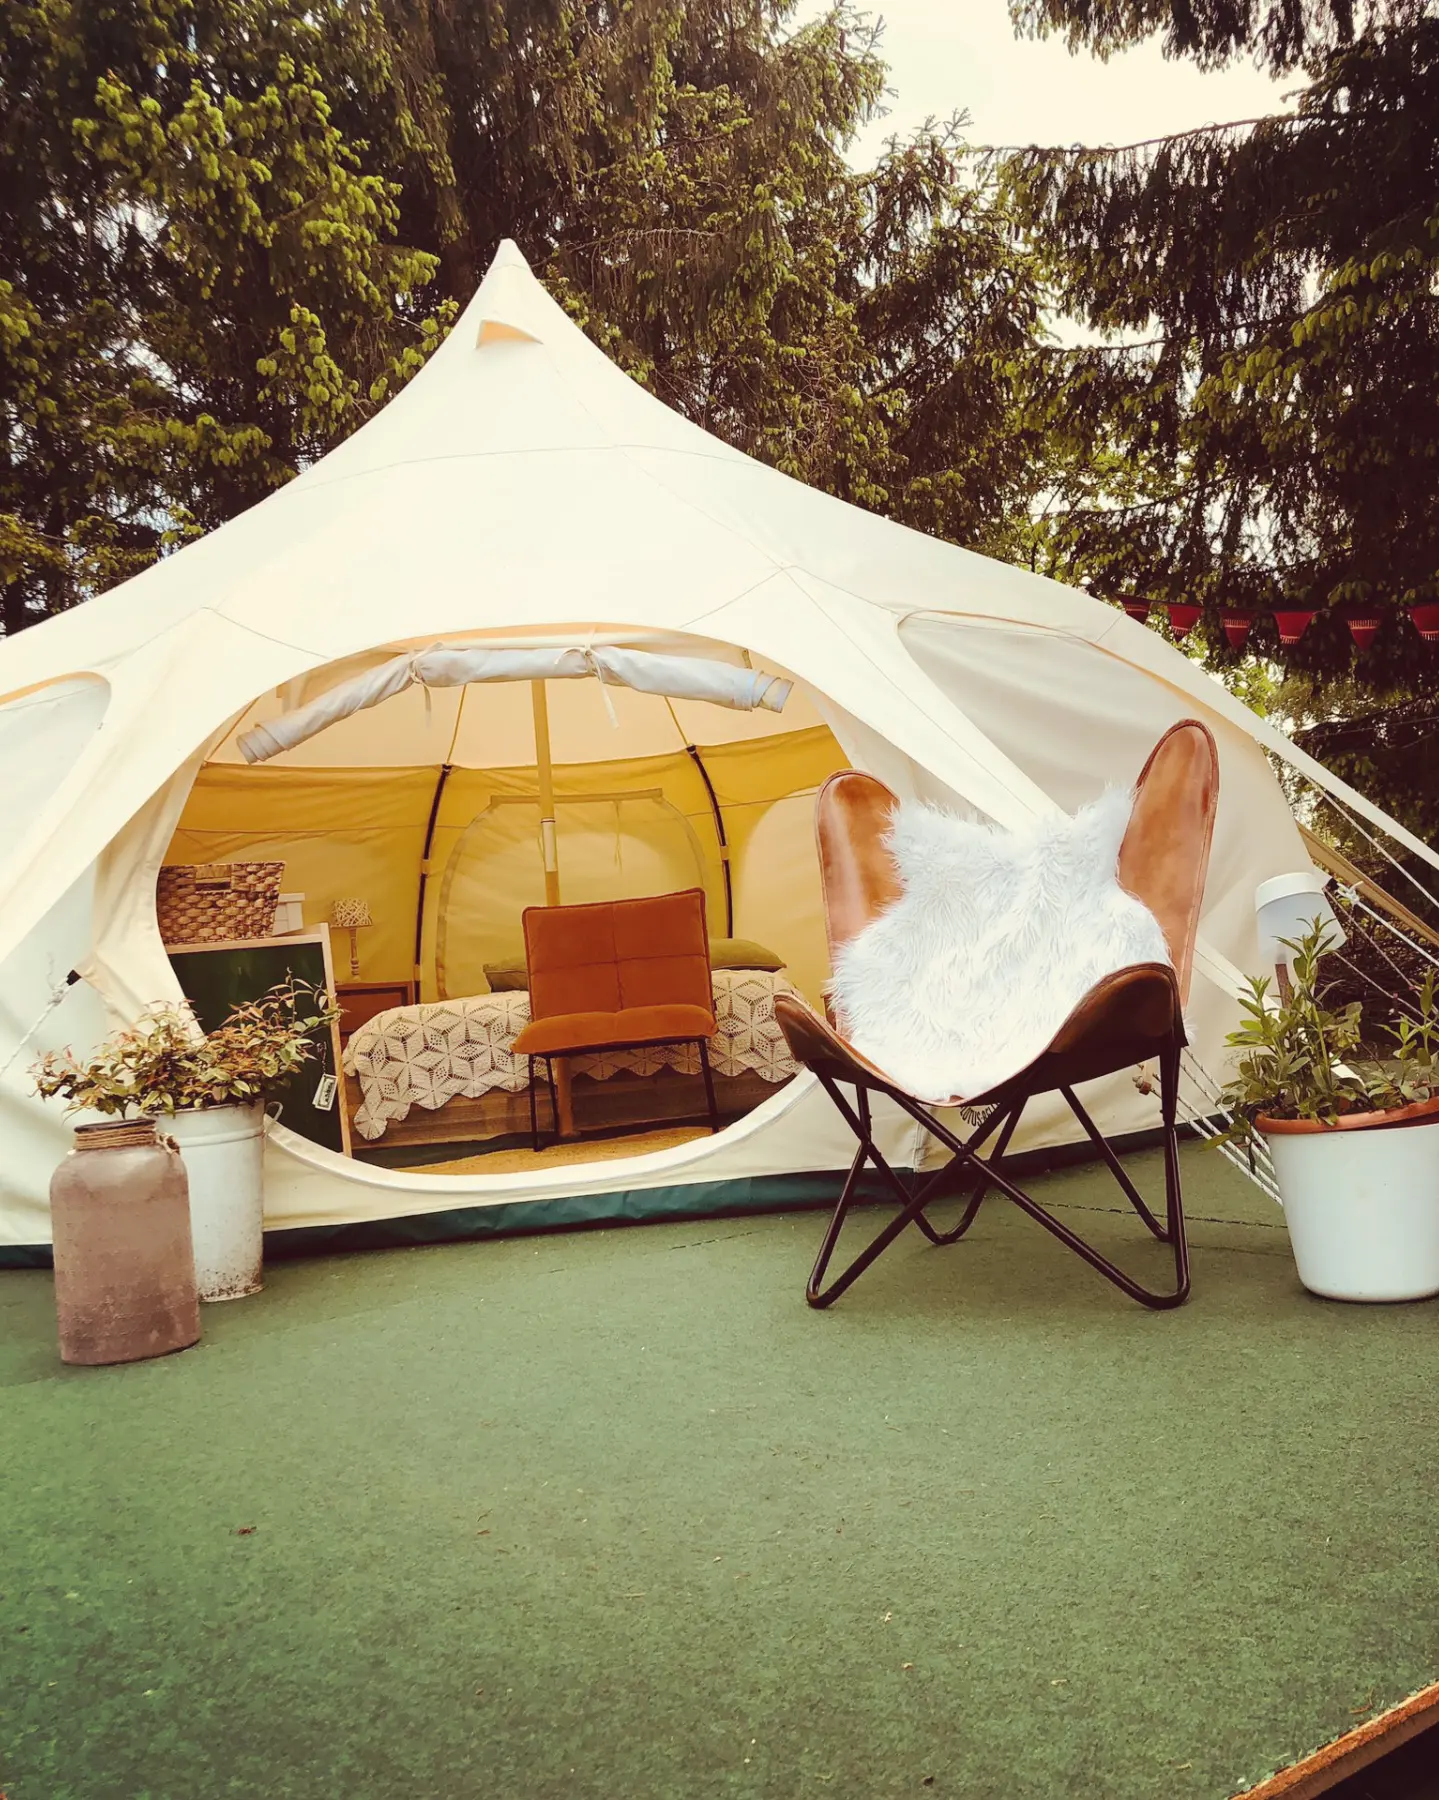 Foto's Camping Kleintje Zandpol (minicamping)